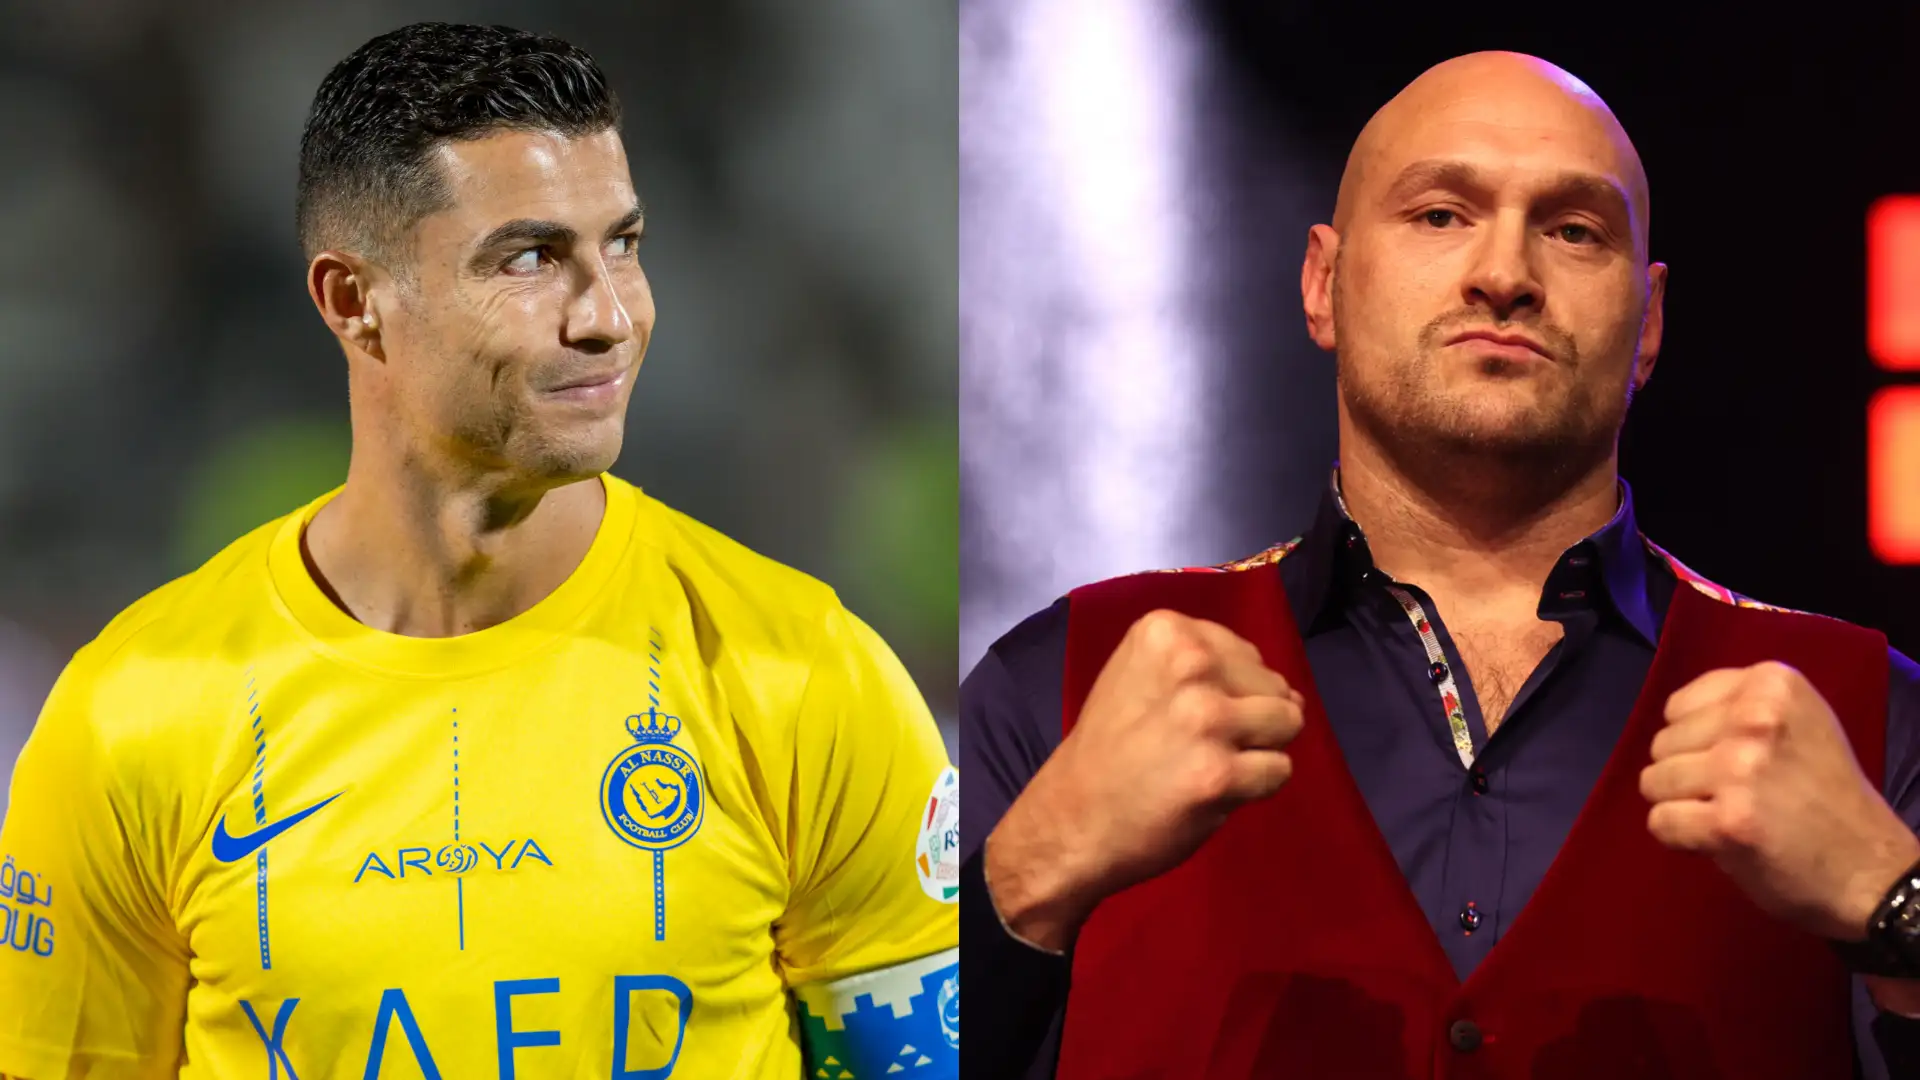 Revealed: Tyson Fury set to rival Cristiano Ronaldo’s insane Al-Nassr salary as Gypsy King prepares for Oleksandr Usyk fight in Saudi Arabia